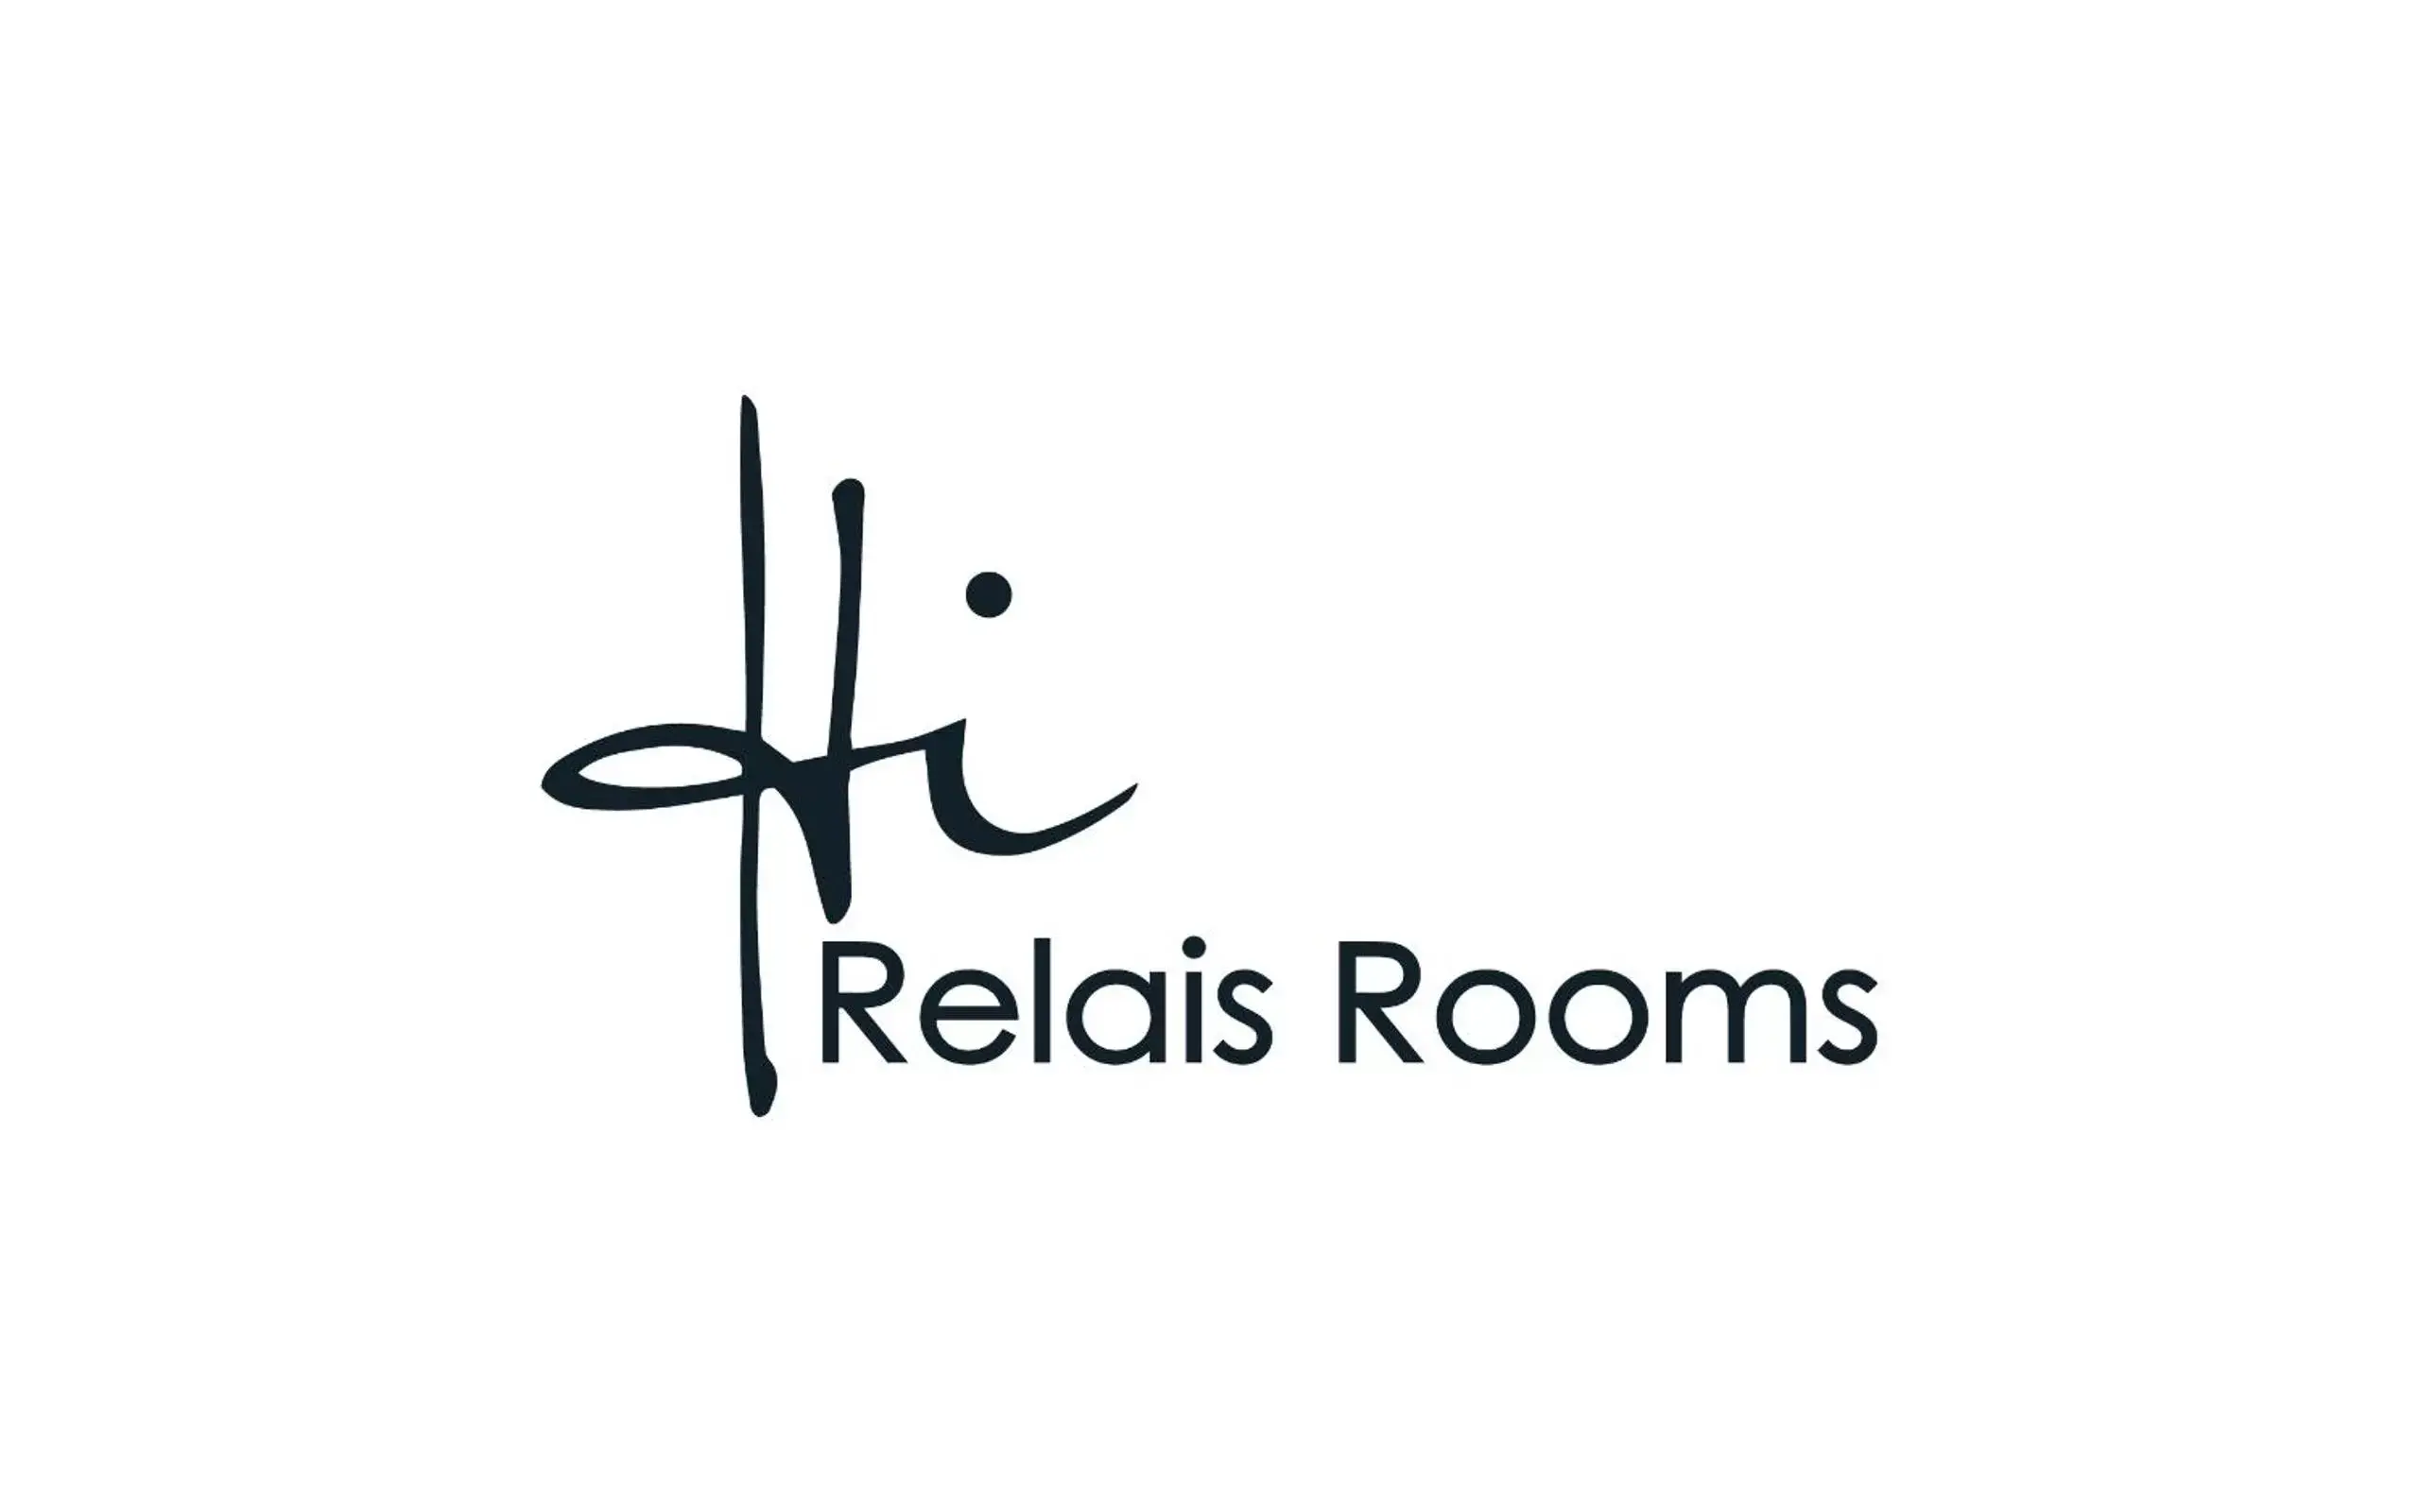 Property logo or sign, Property Logo/Sign in Hi Relais Rooms